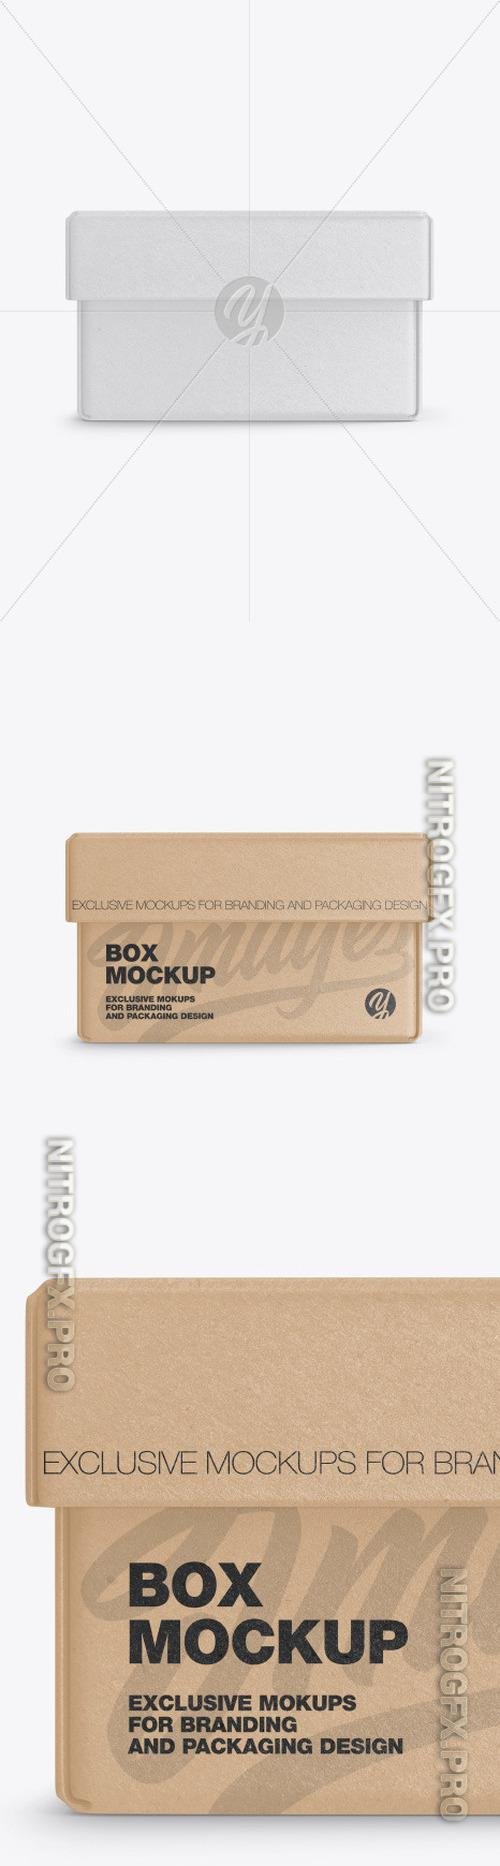 Kraft Paper Box Mockup - 50242